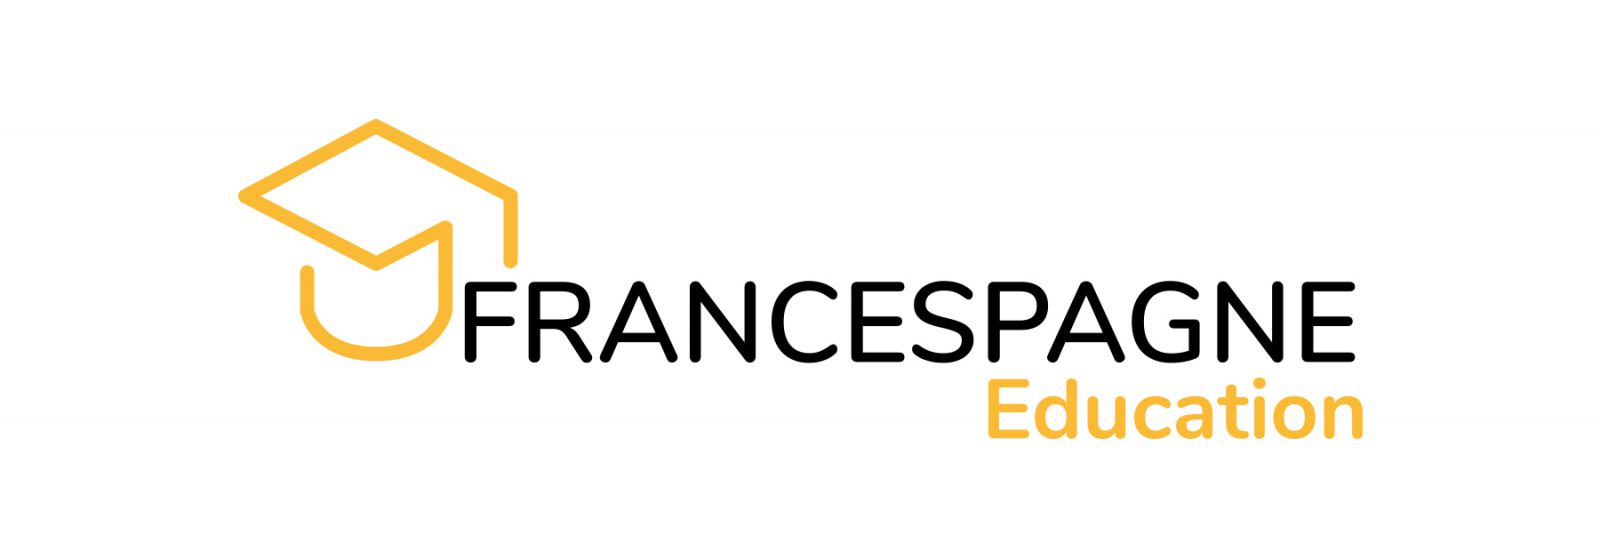 logo france espagne education salon